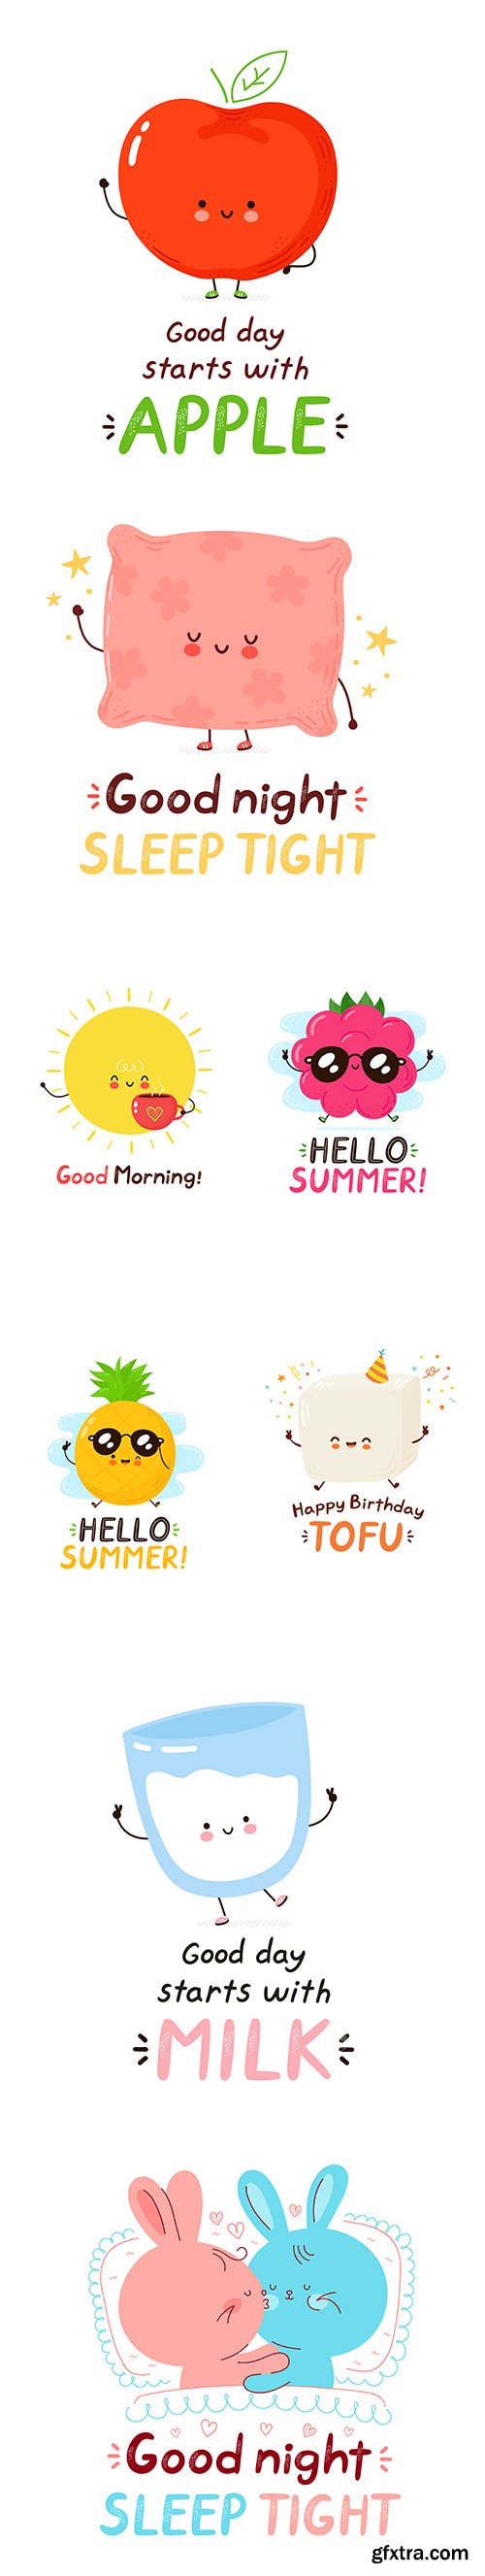 Cute Happy Card Cartoon Character Illustrations